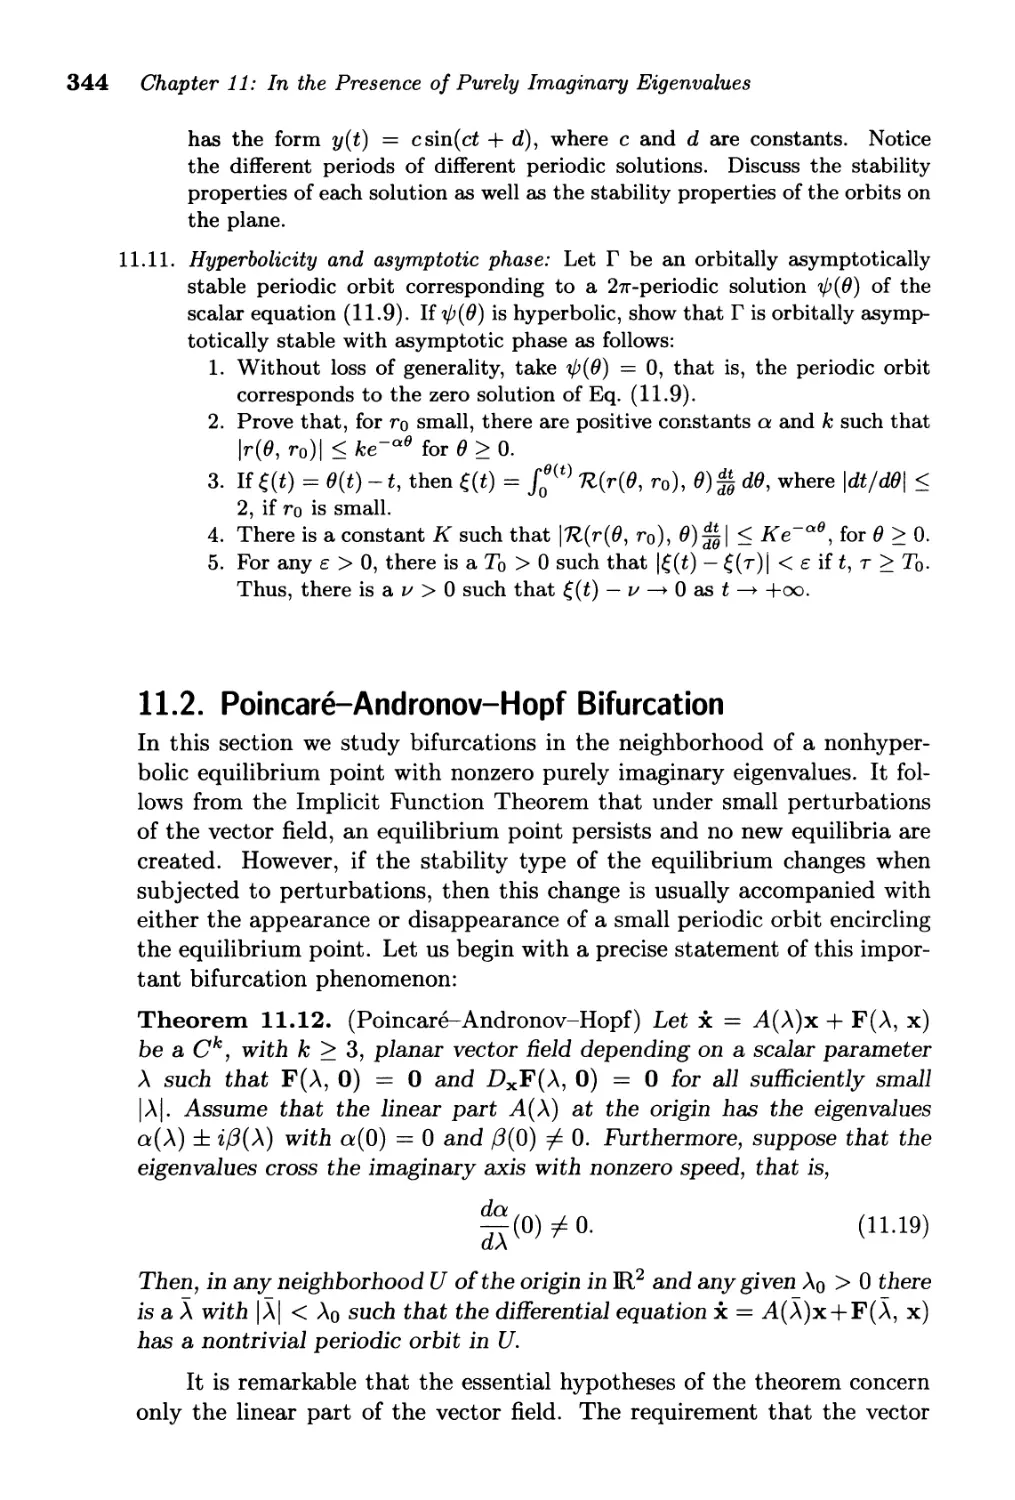 11.2. Poincaré-Andronov-Hopf Bifurcation